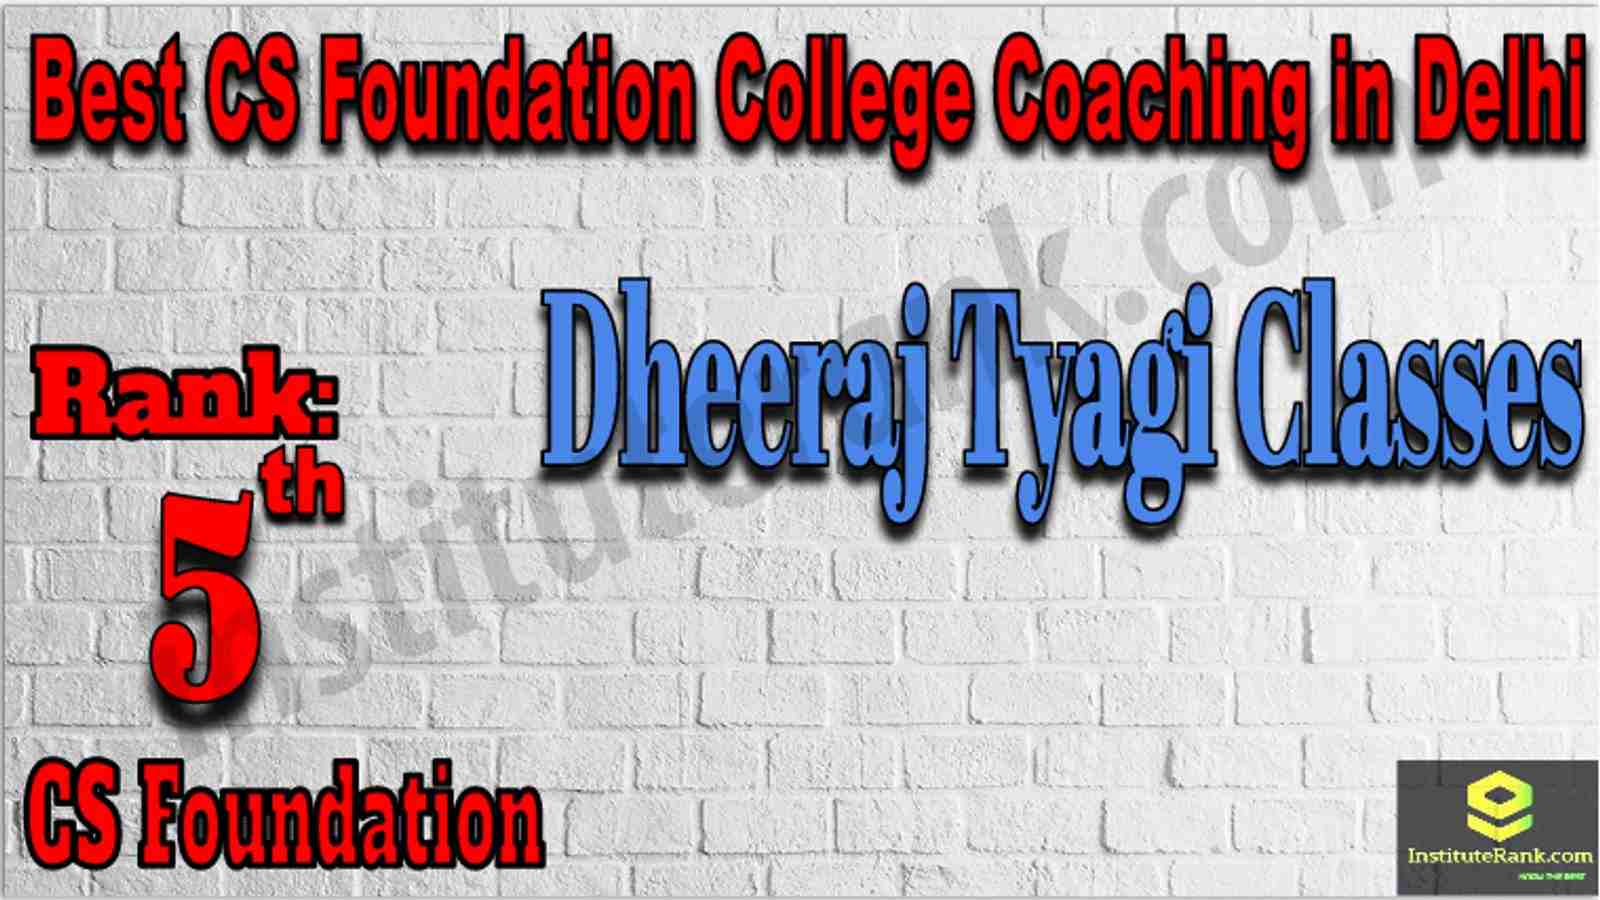 Rank5 Best CS Foundation College Coaching in Delhi